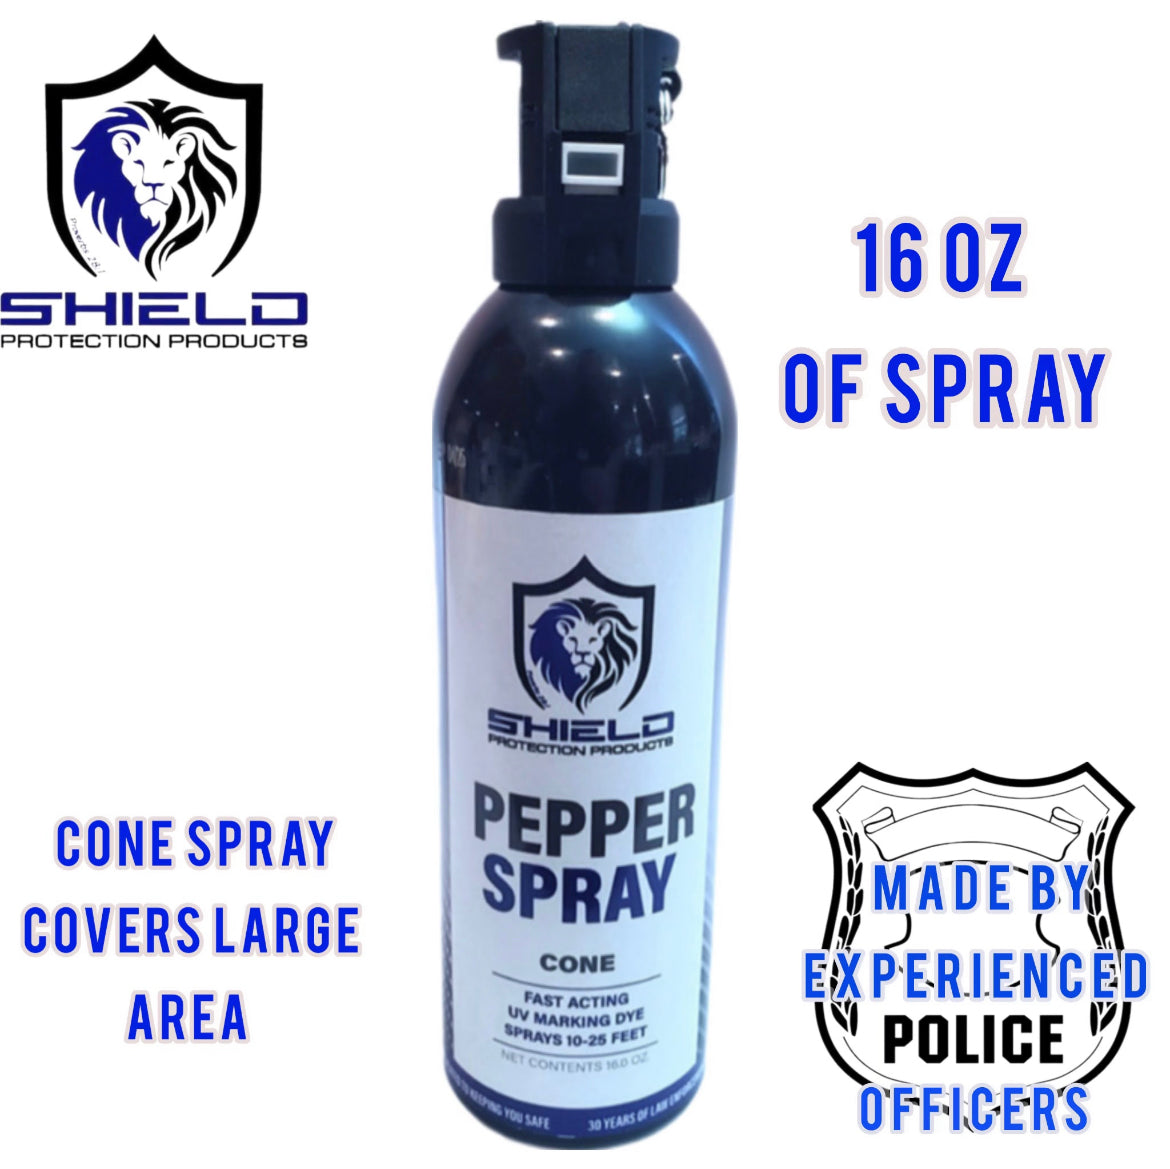 Big pepper spray